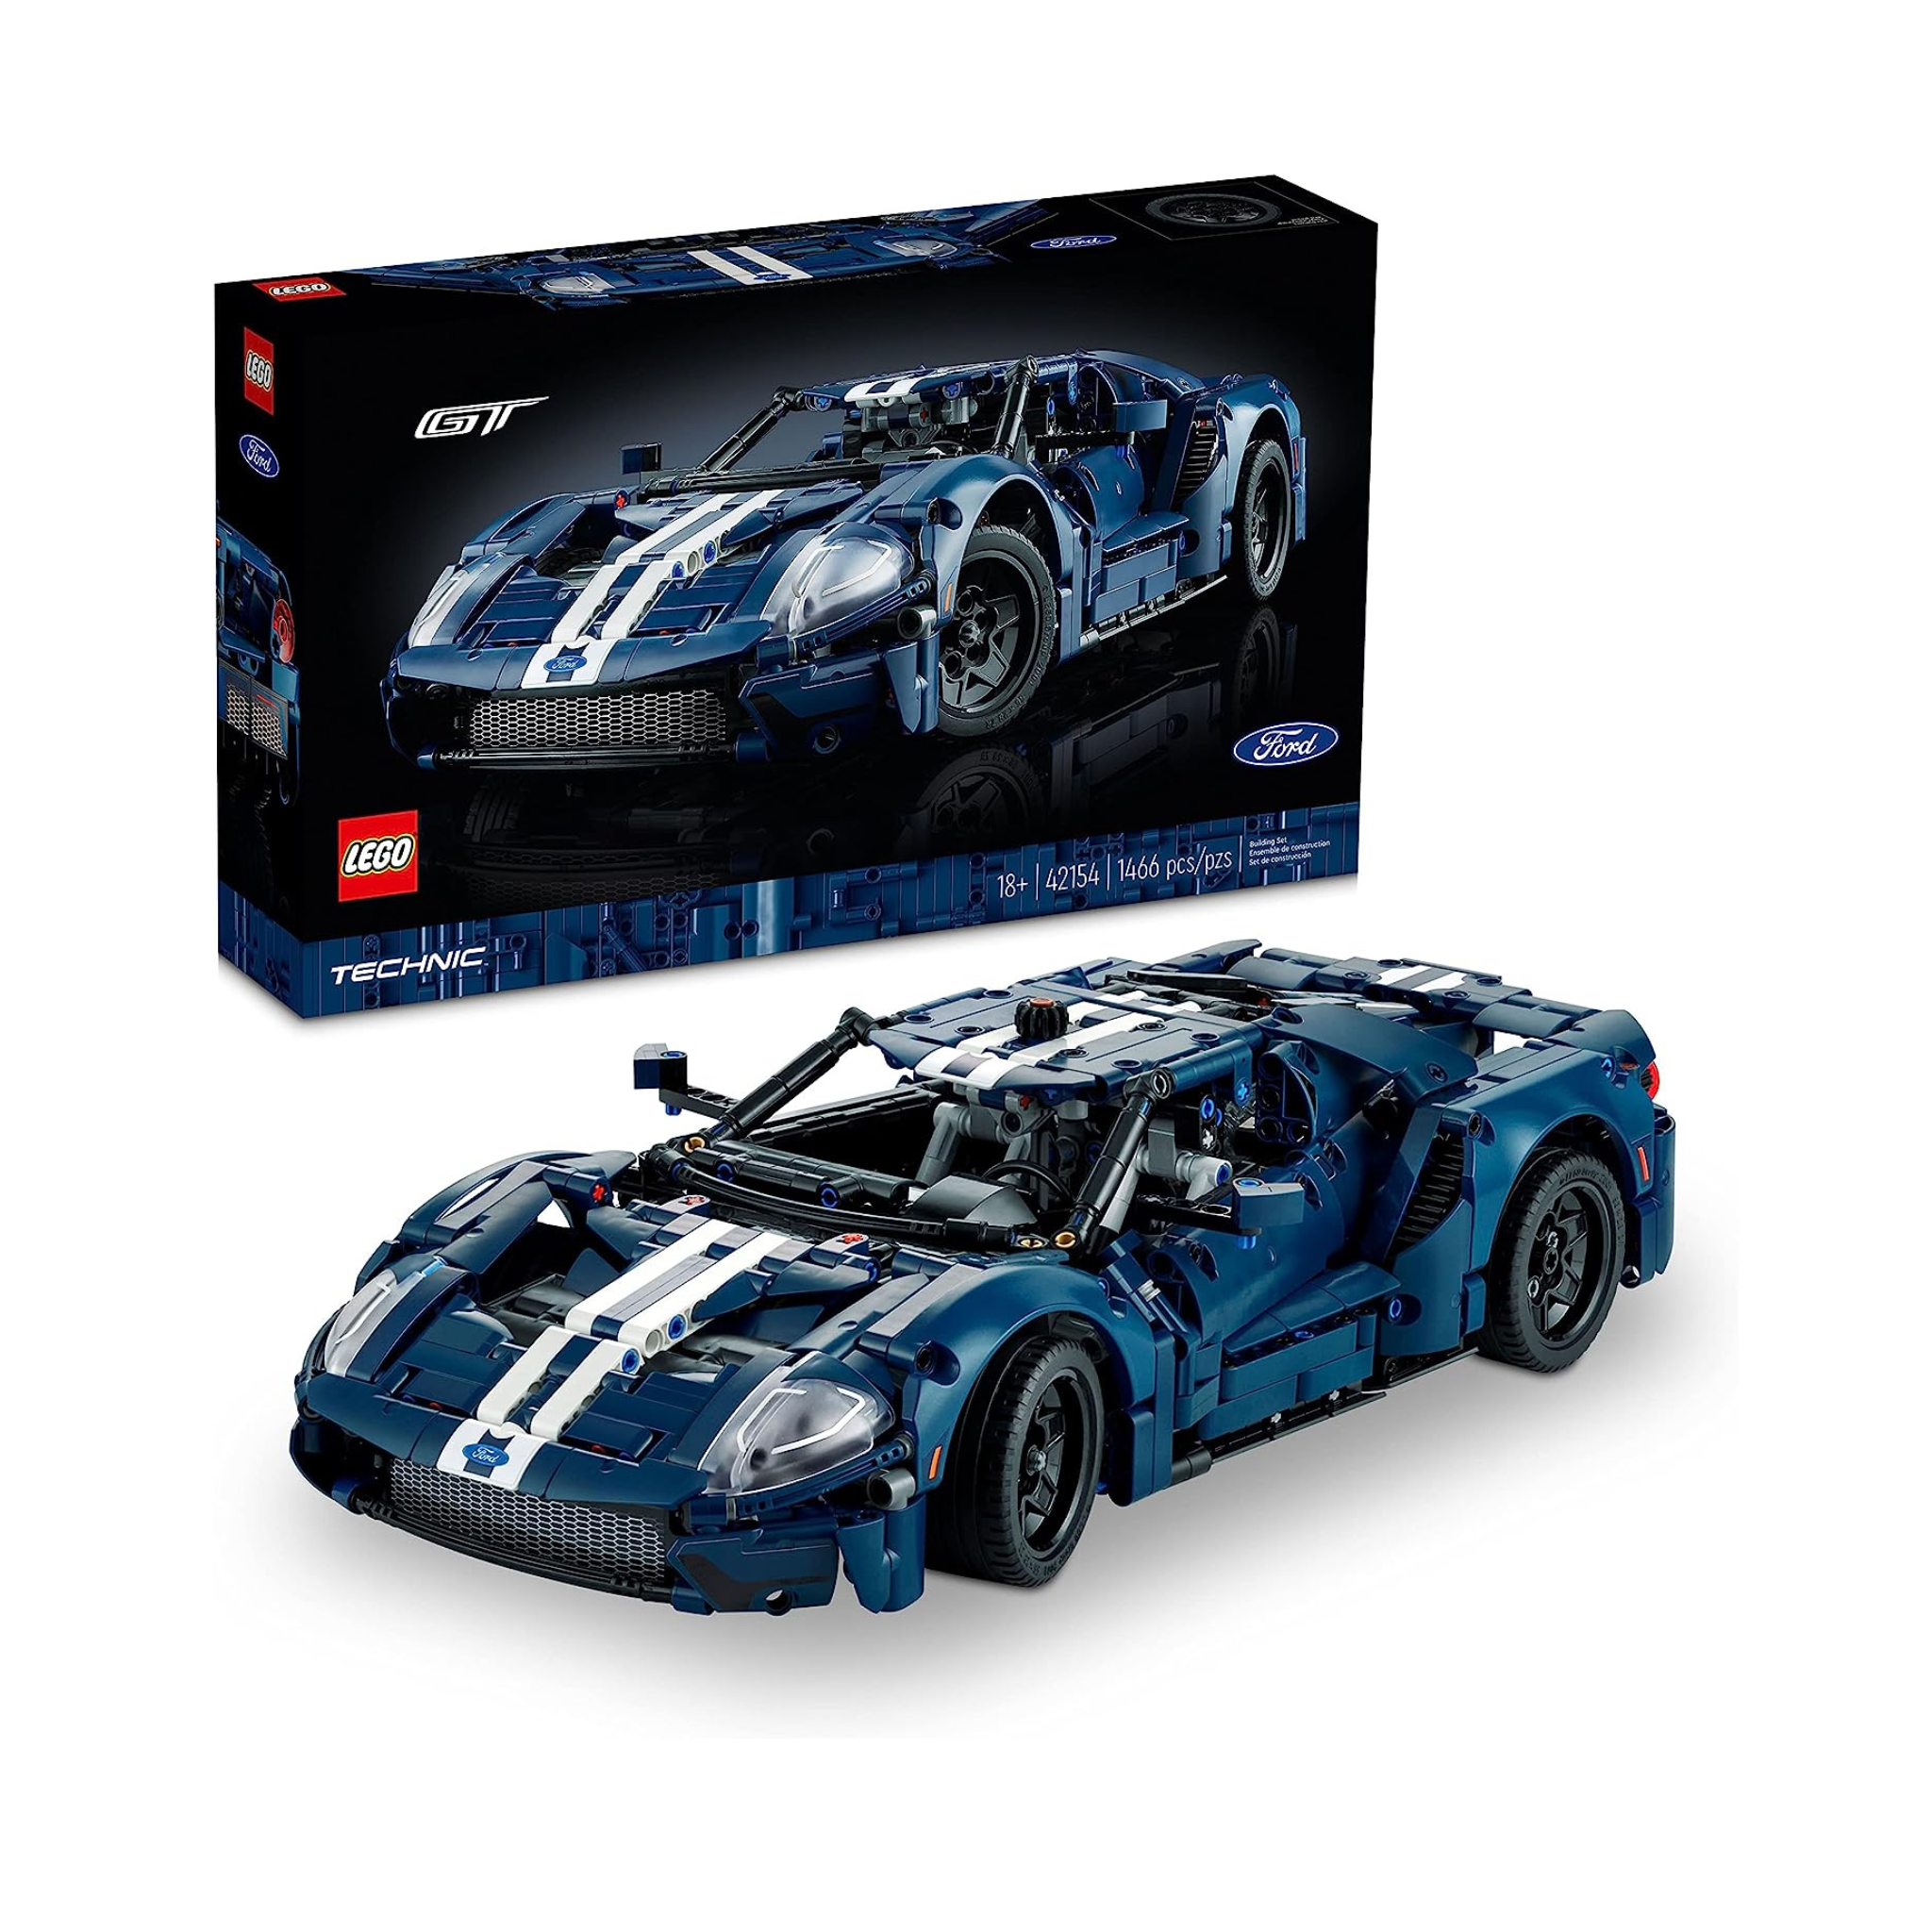 1466-Piece LEGO Technic 2022 Ford GT Car Building Kit